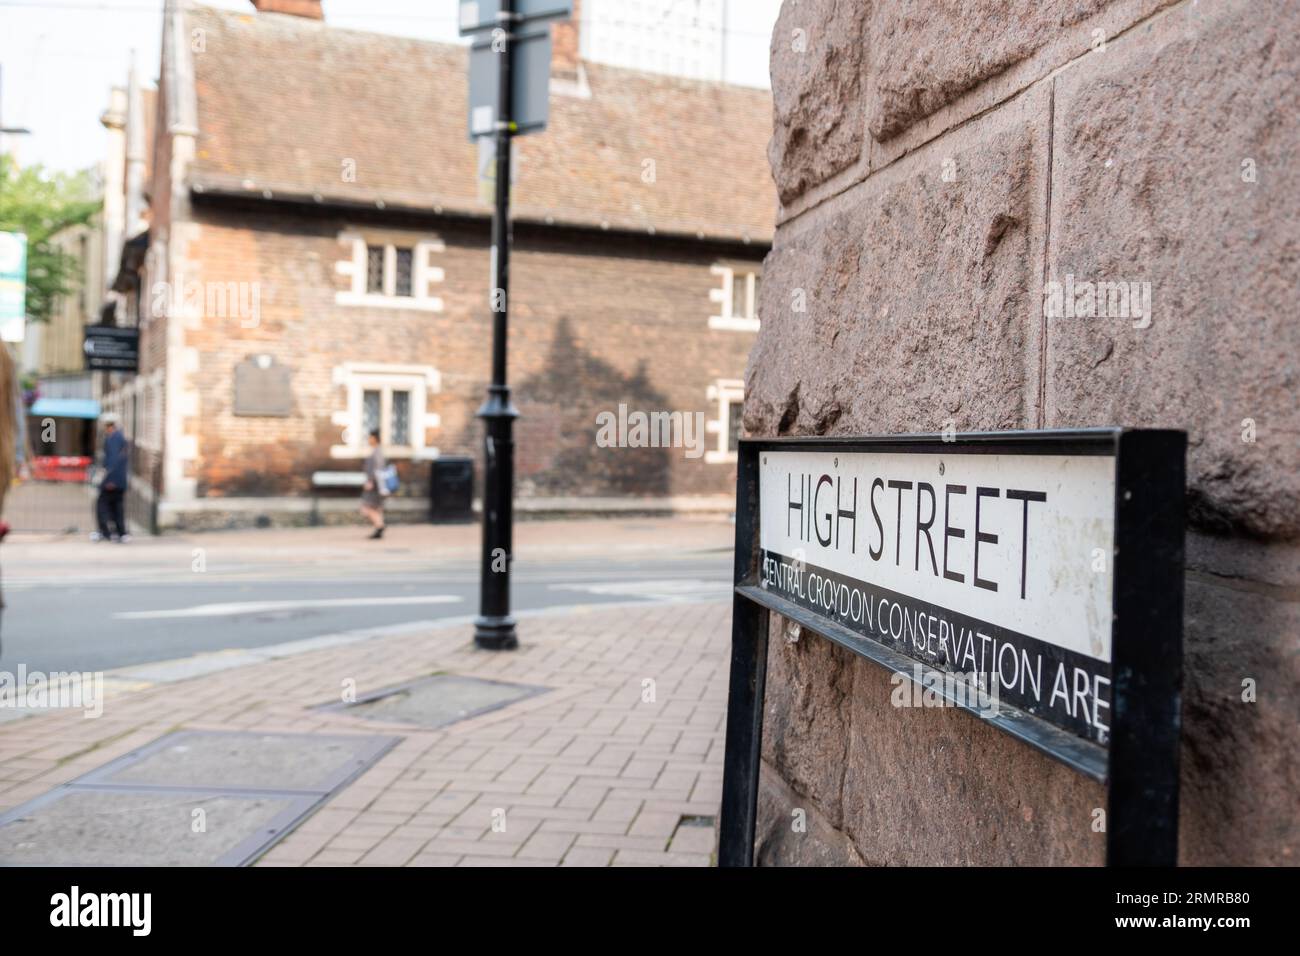 CROYDON, LONDON - 29. AUGUST 2023: Straßenschild der High Street im Central Croydon Conservation Area Stockfoto